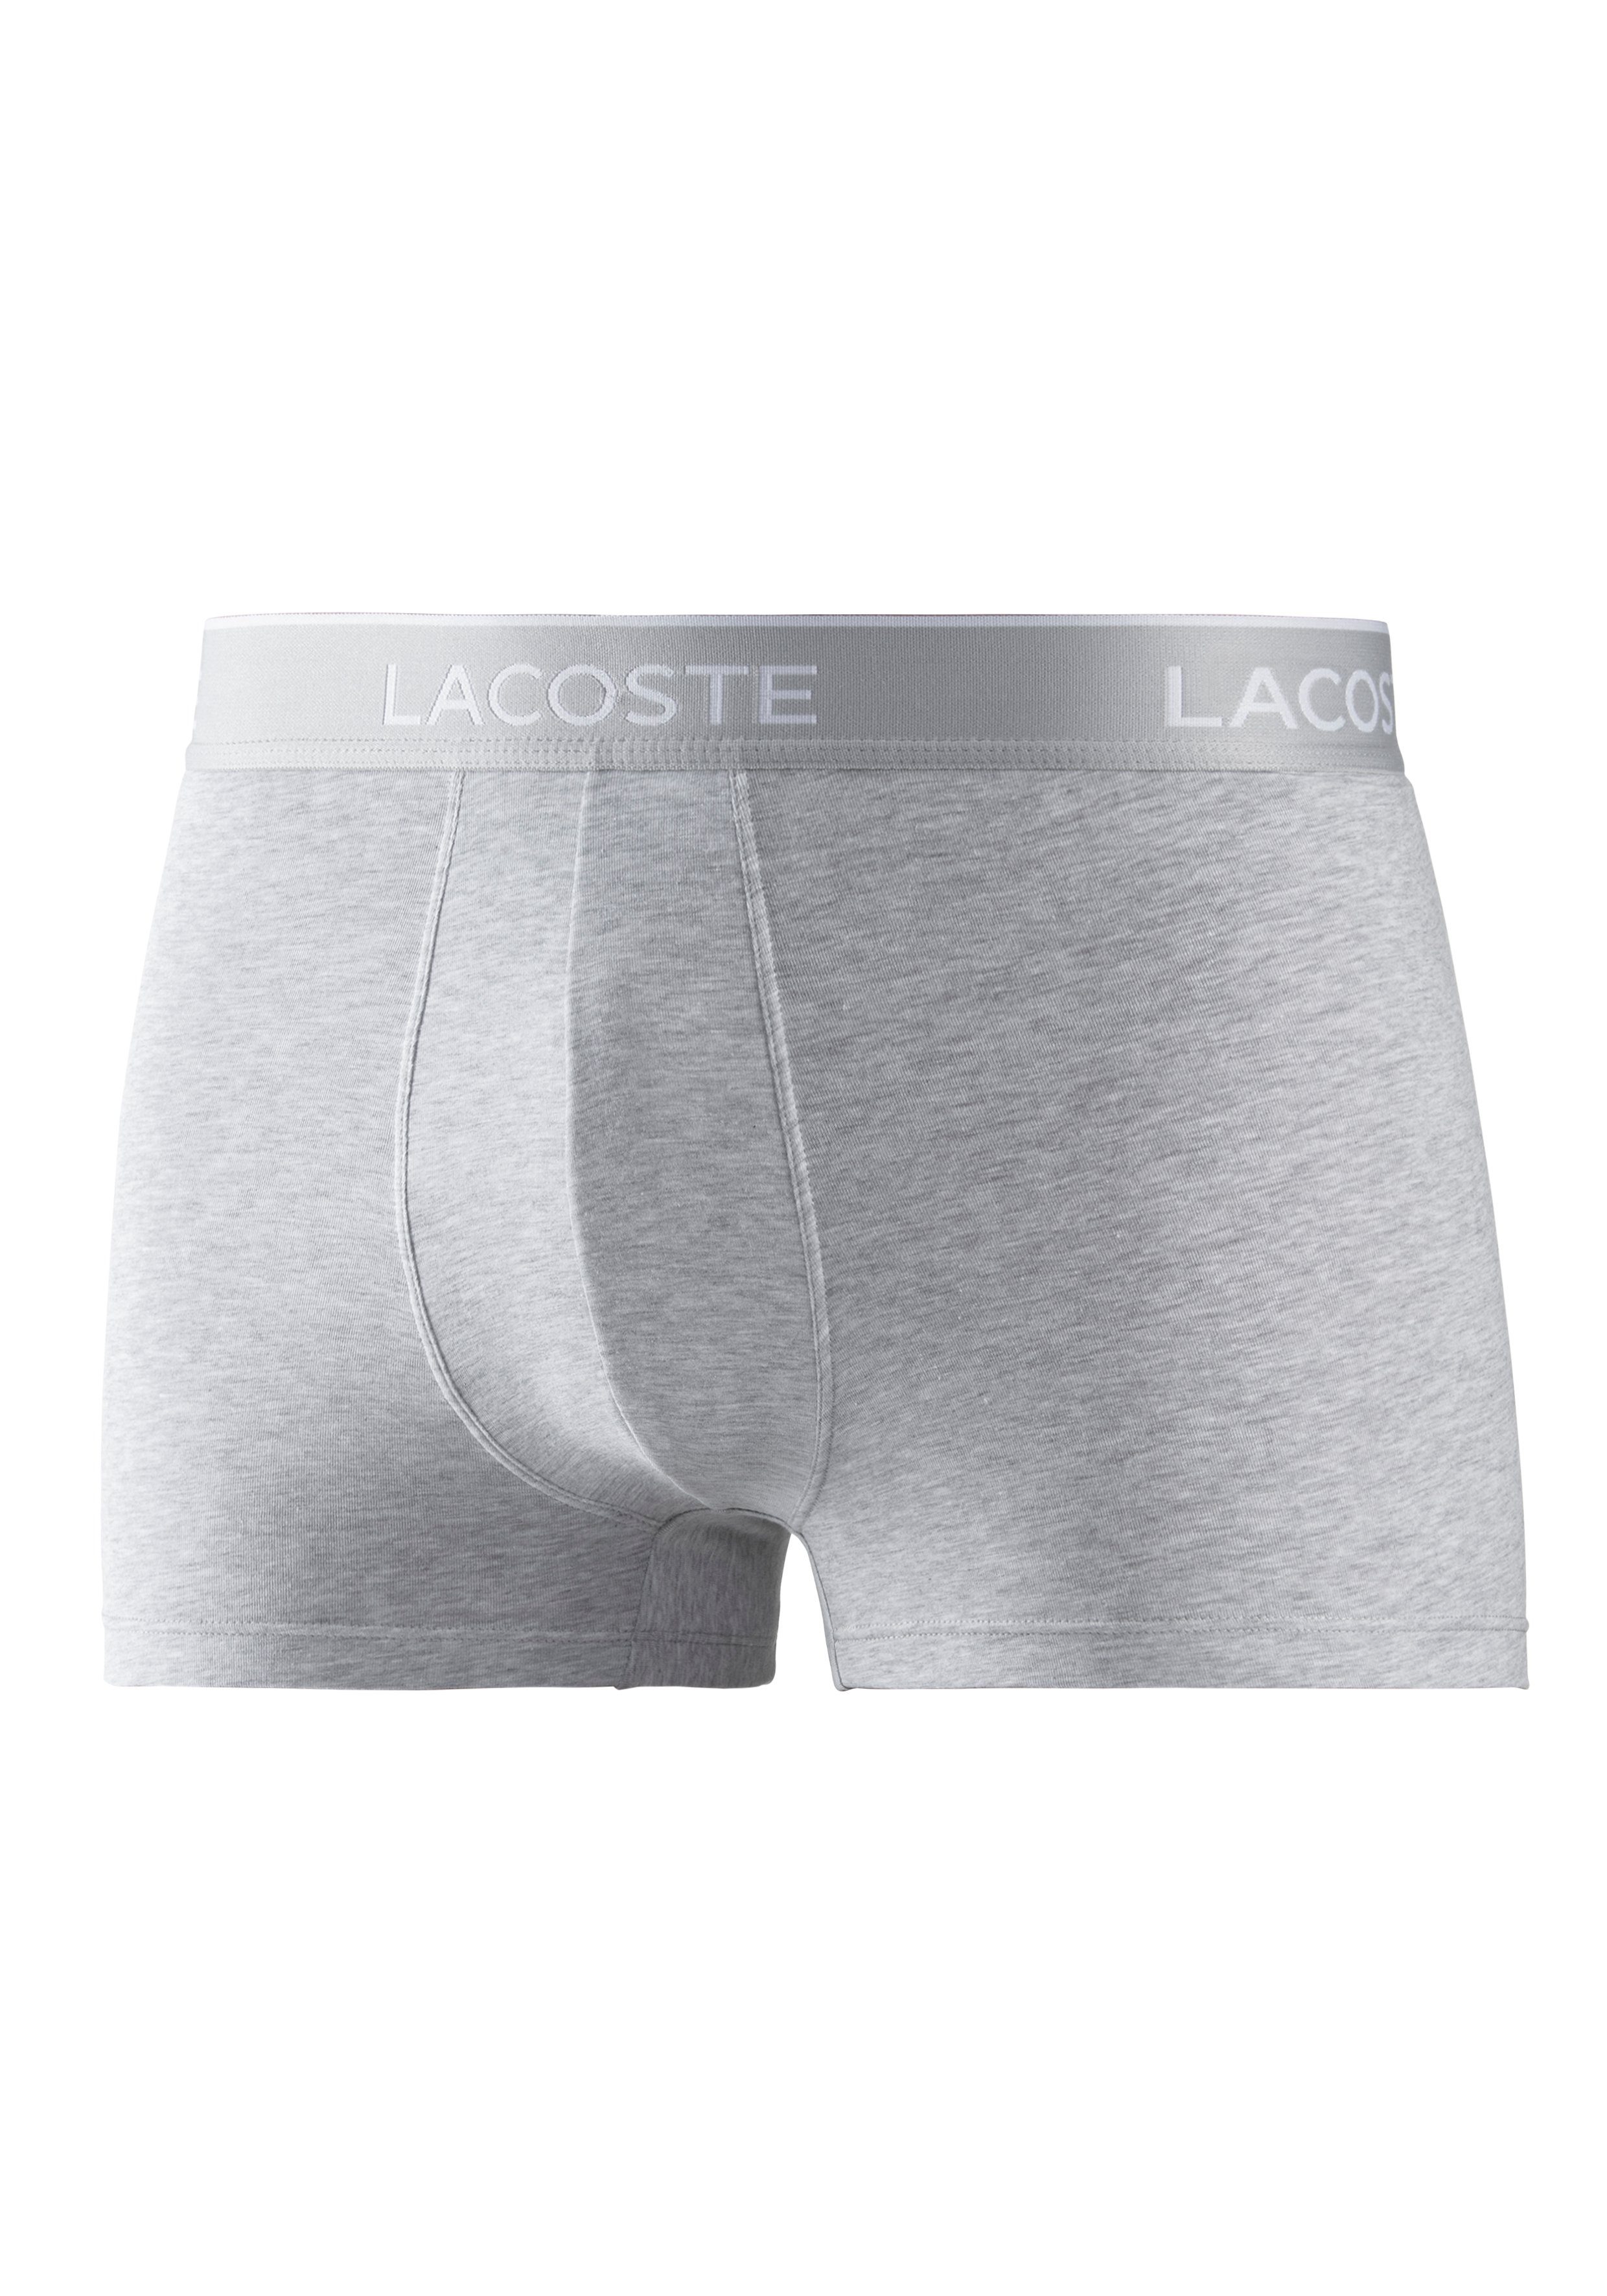 aus Lacoste atmungsaktivem (Packung, weiß, schwarz, grau-meliert Lacoste Premium 3-St., 3er-Pack) Boxershorts Herren Material eng Trunk